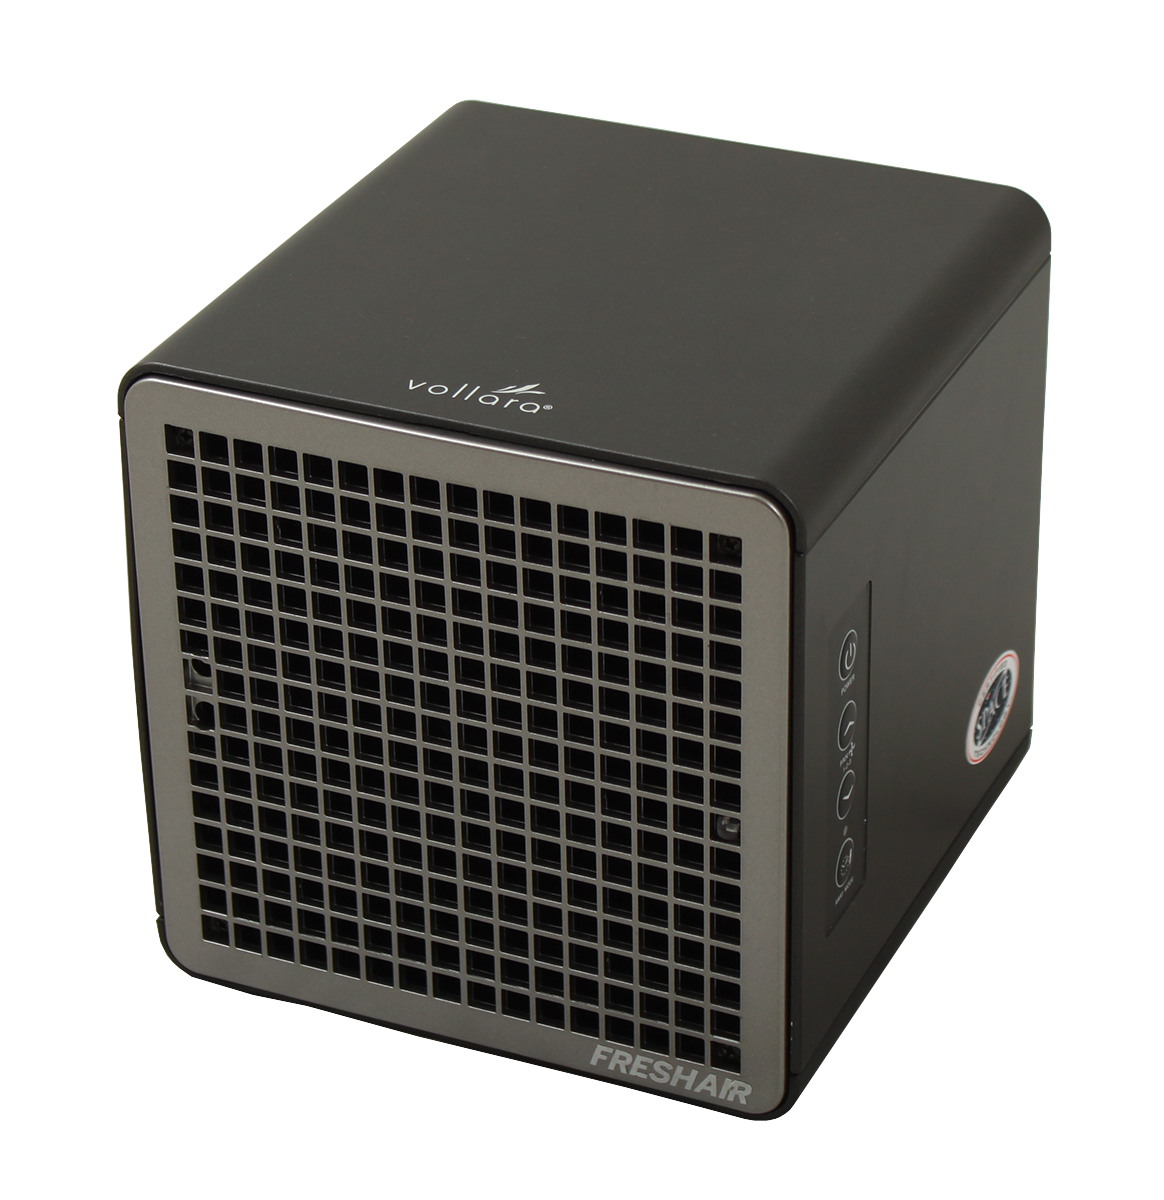 Cube air. Очиститель воздуха Fresh Air. Очиститель воздуха Fresh Air. Ионизатор. Очиститель воздуха Air Comfort GH-2160s. Ecobox очиститель воздуха.